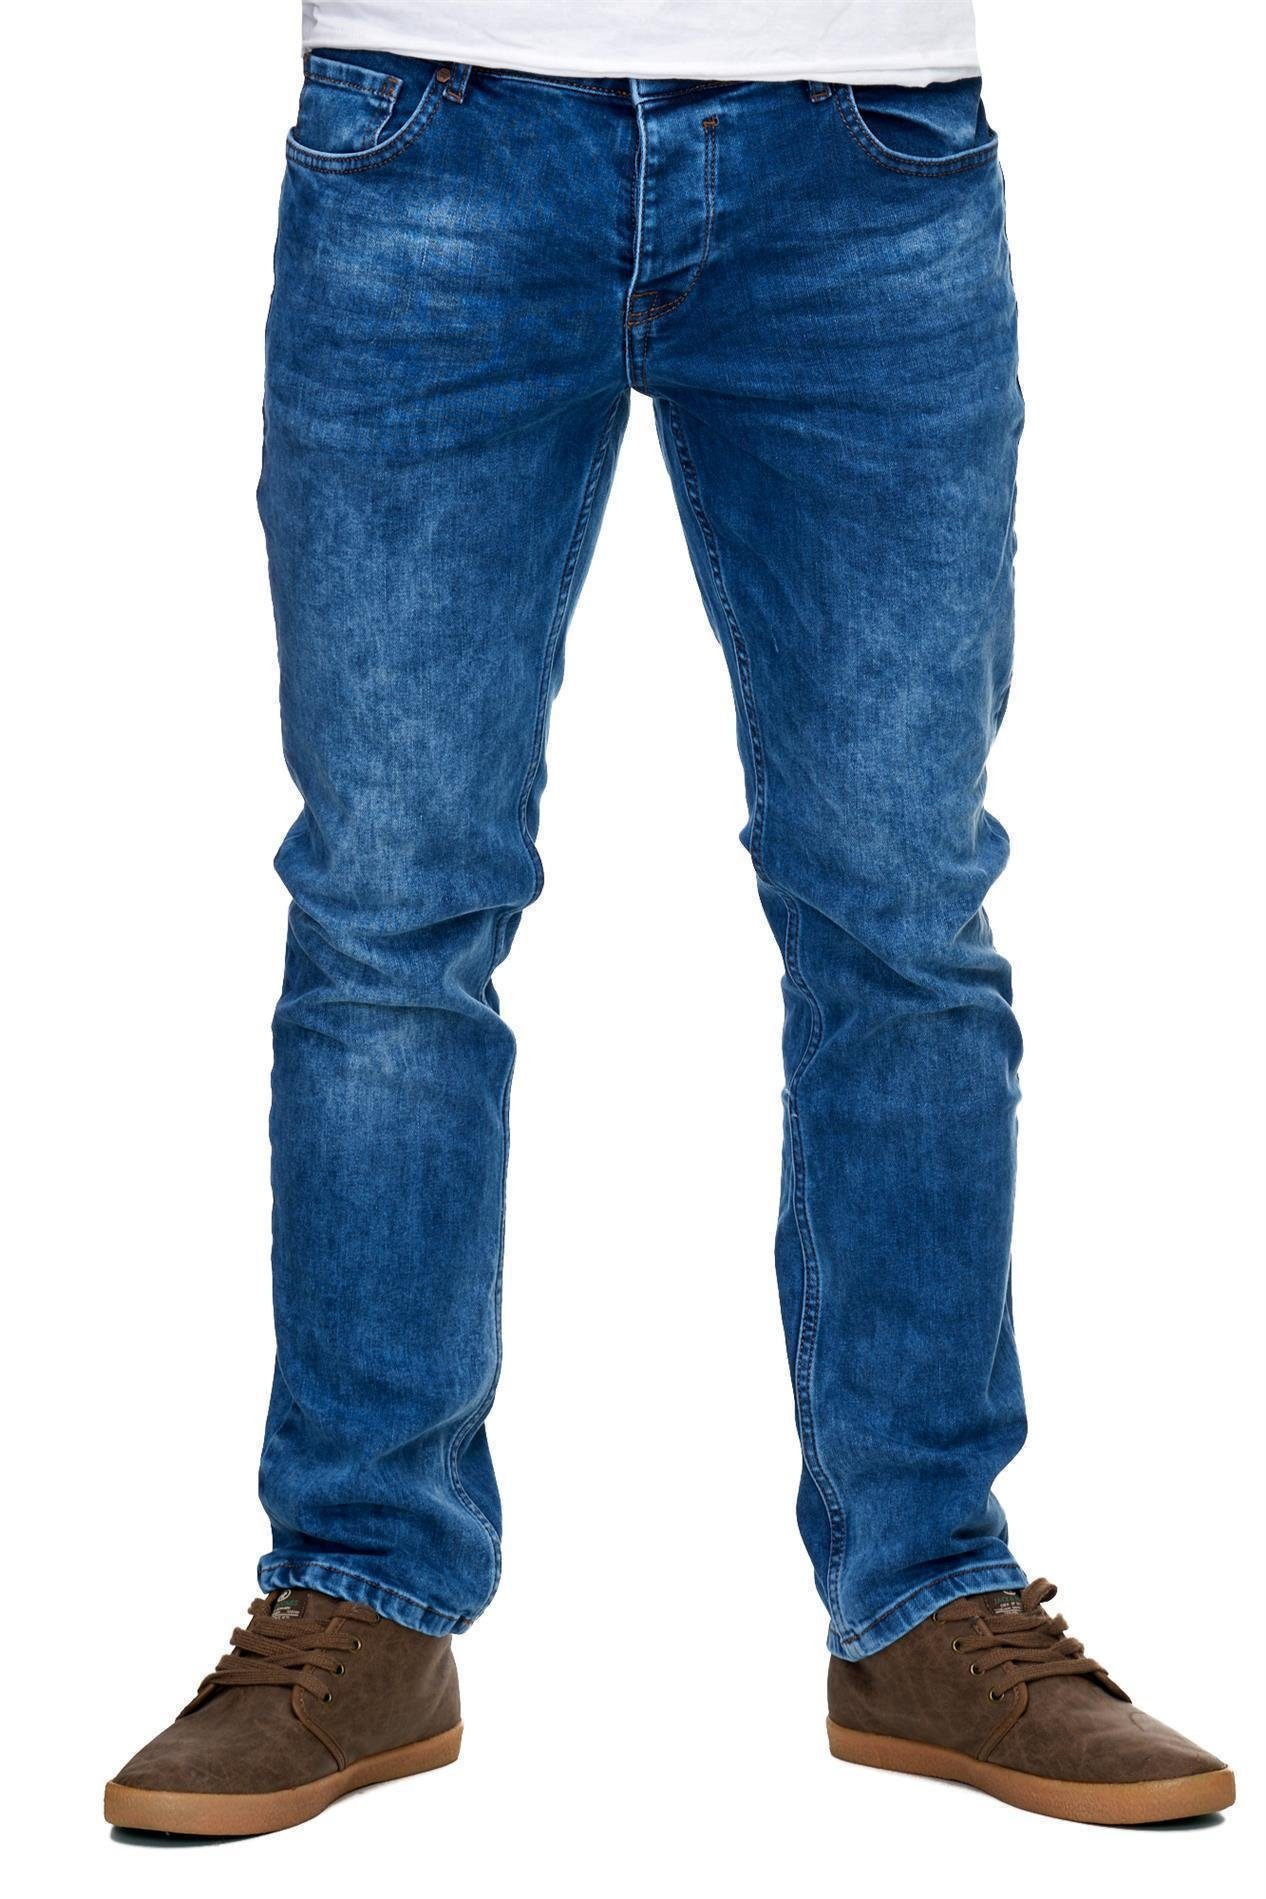 Fit Stretch Stretch-Denim Slim Jeans-Hose Jeans-Herren Basic Stretch-Jeans Reslad Slim blau Jeans-Hose Fit Reslad Style